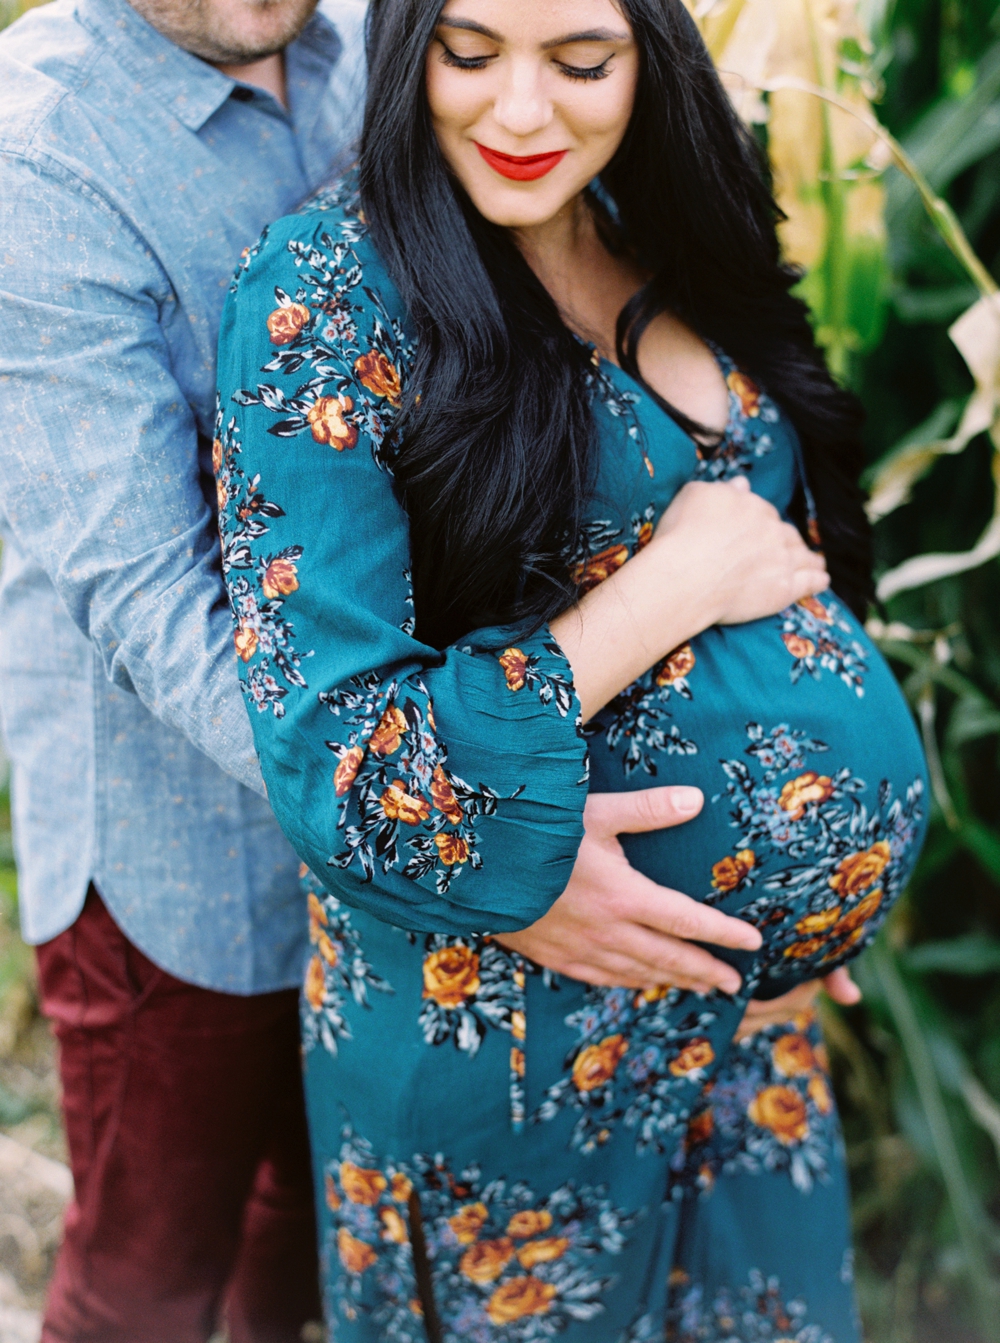 Calgary Maternity Photographers | Fall Maternity Session | Fine Art Film Photographer | Fashion Blogger Convey The Moment